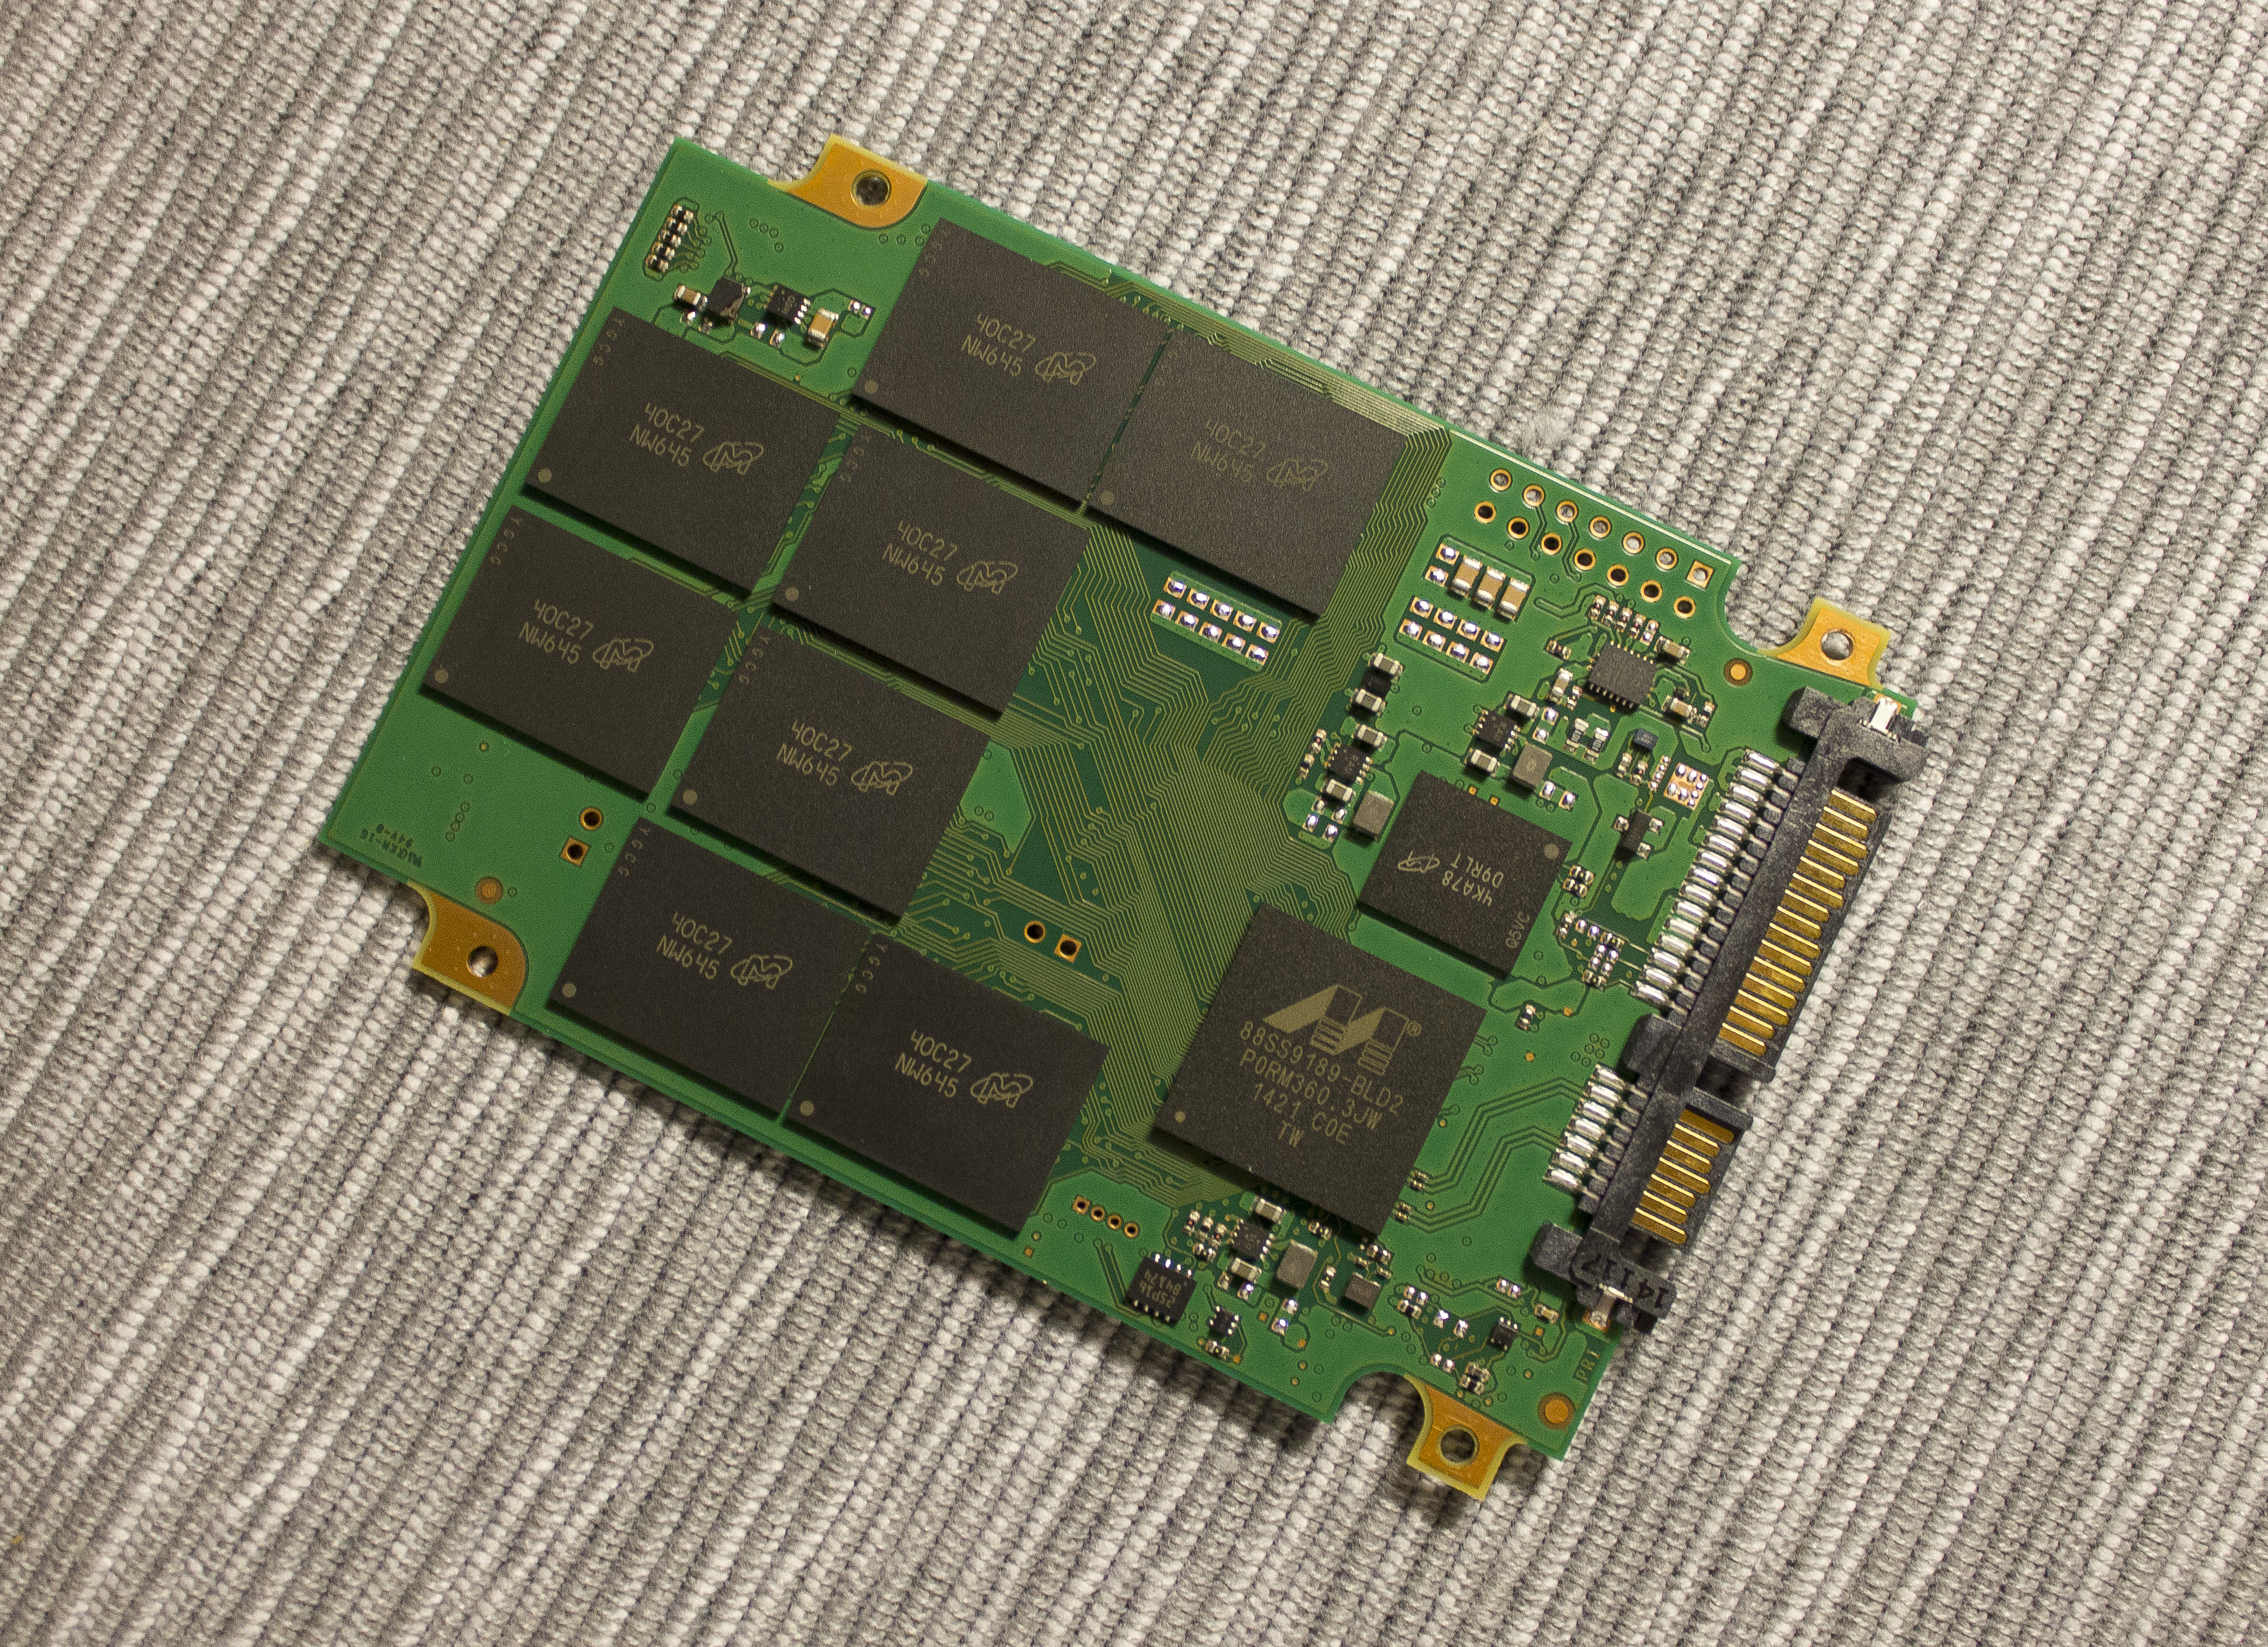 Micron M600 (128GB, 256GB & 1TB) SSD Review